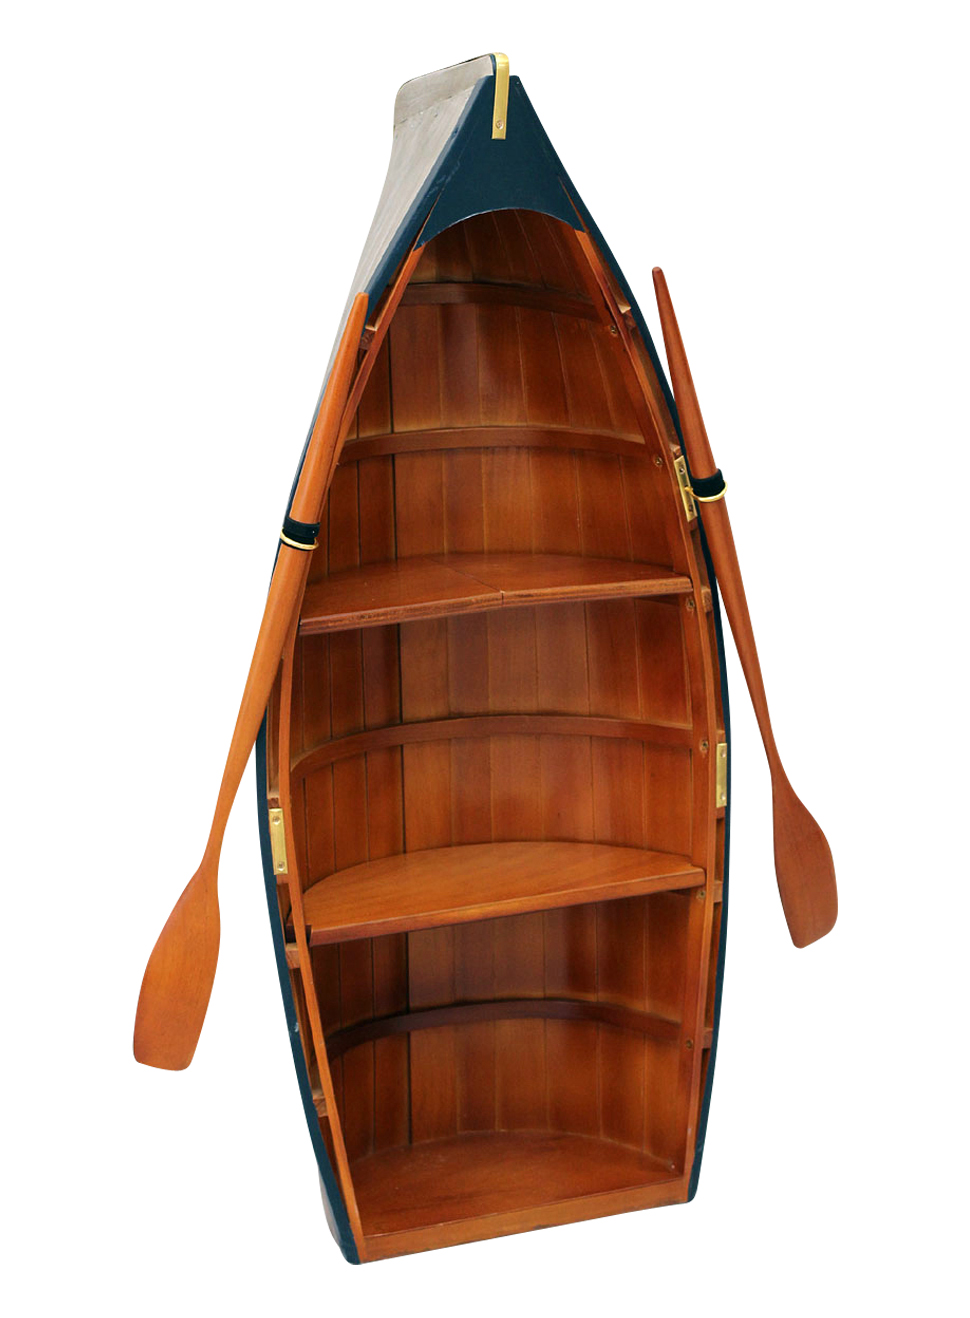 Boat wall shelf - replica rowboat shape - wood - 2´11.5 (90cm)